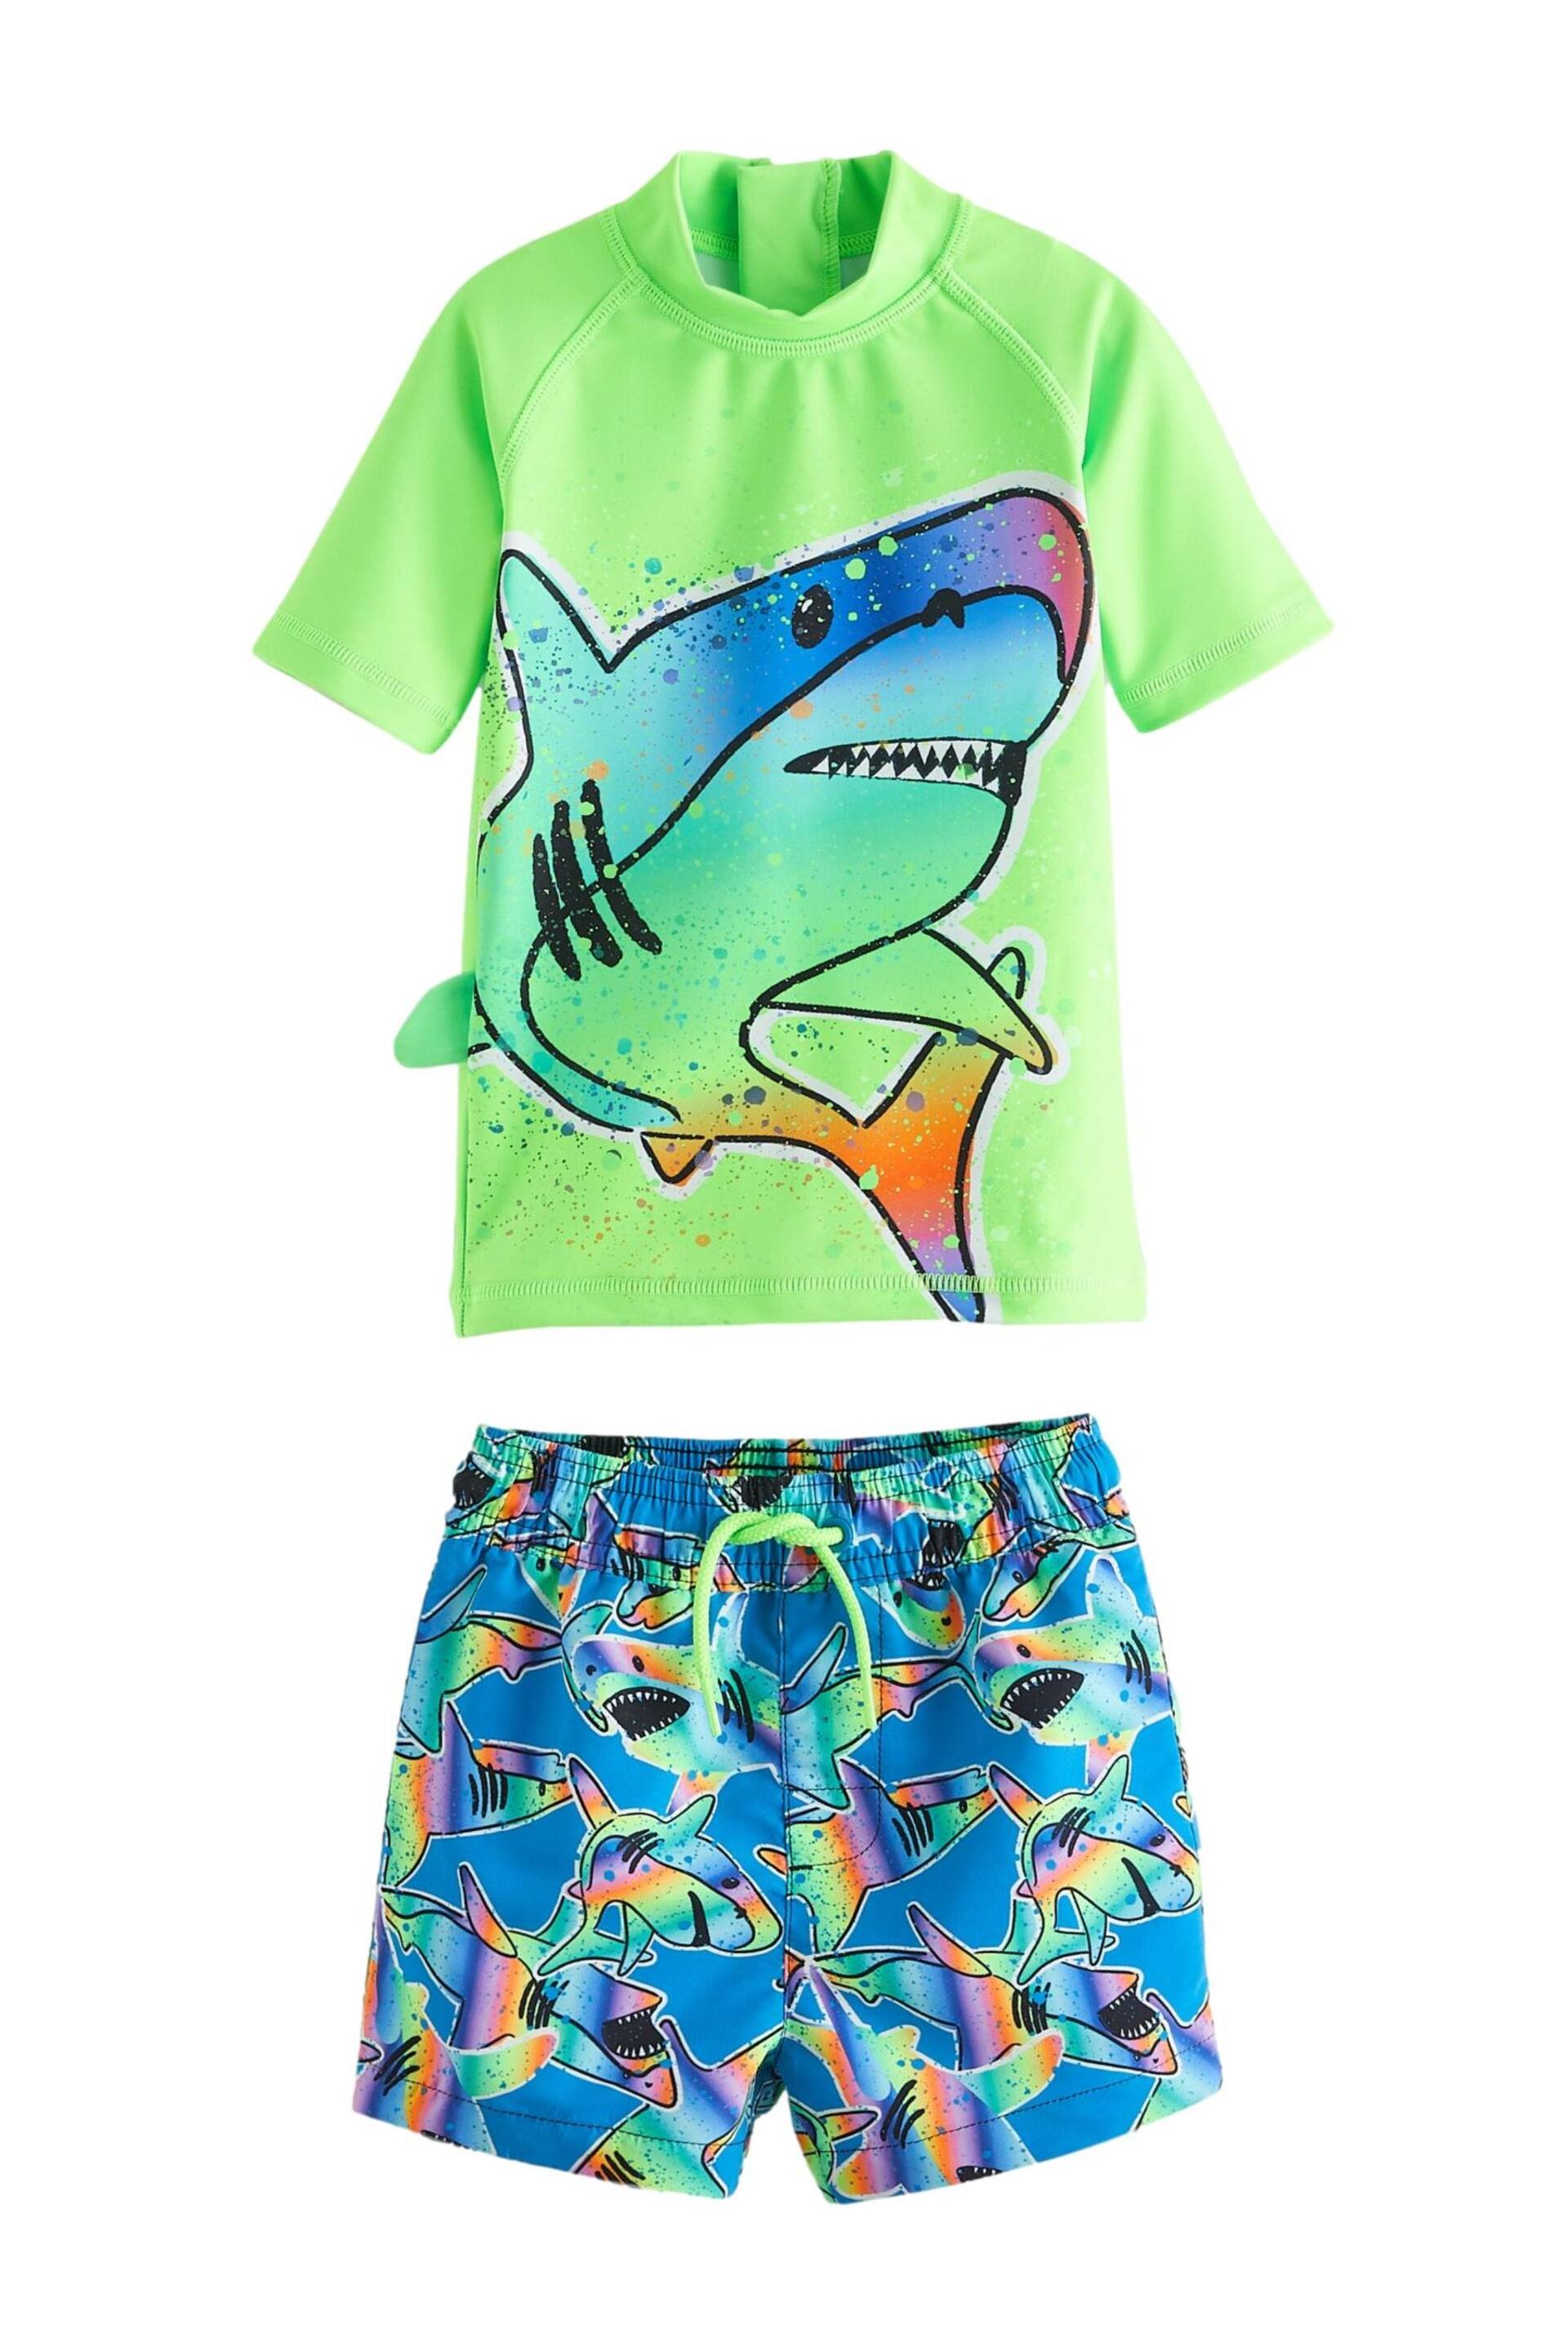 Green Rainbow Shark Sunsafe Top and Shorts Set (3mths-7yrs) - Image 7 of 9